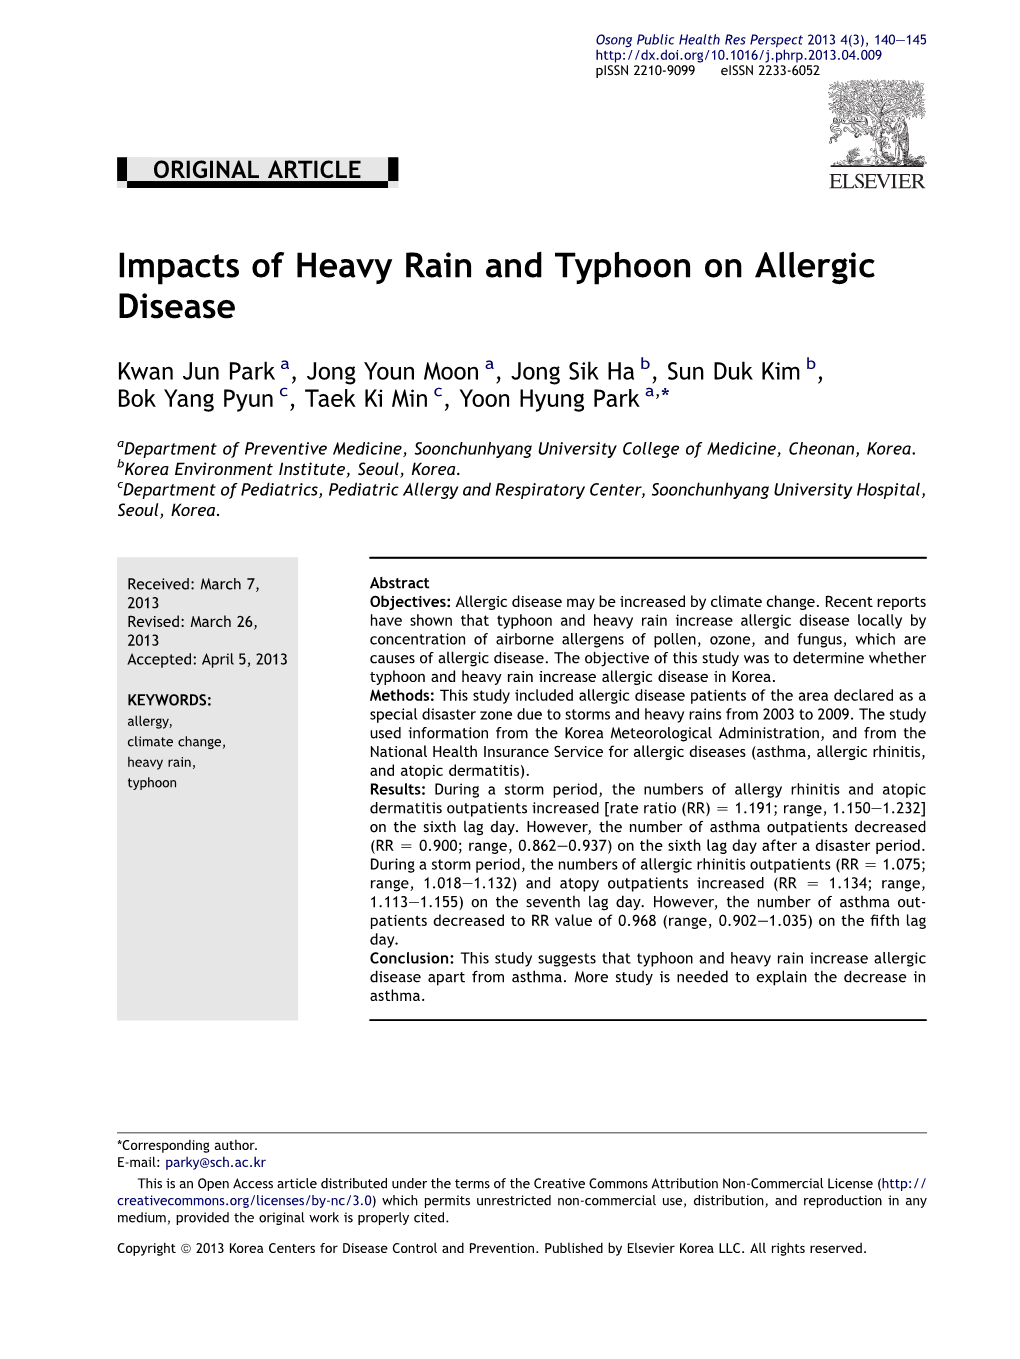 Impacts of Heavy Rain and Typhoon on Allergic Disease